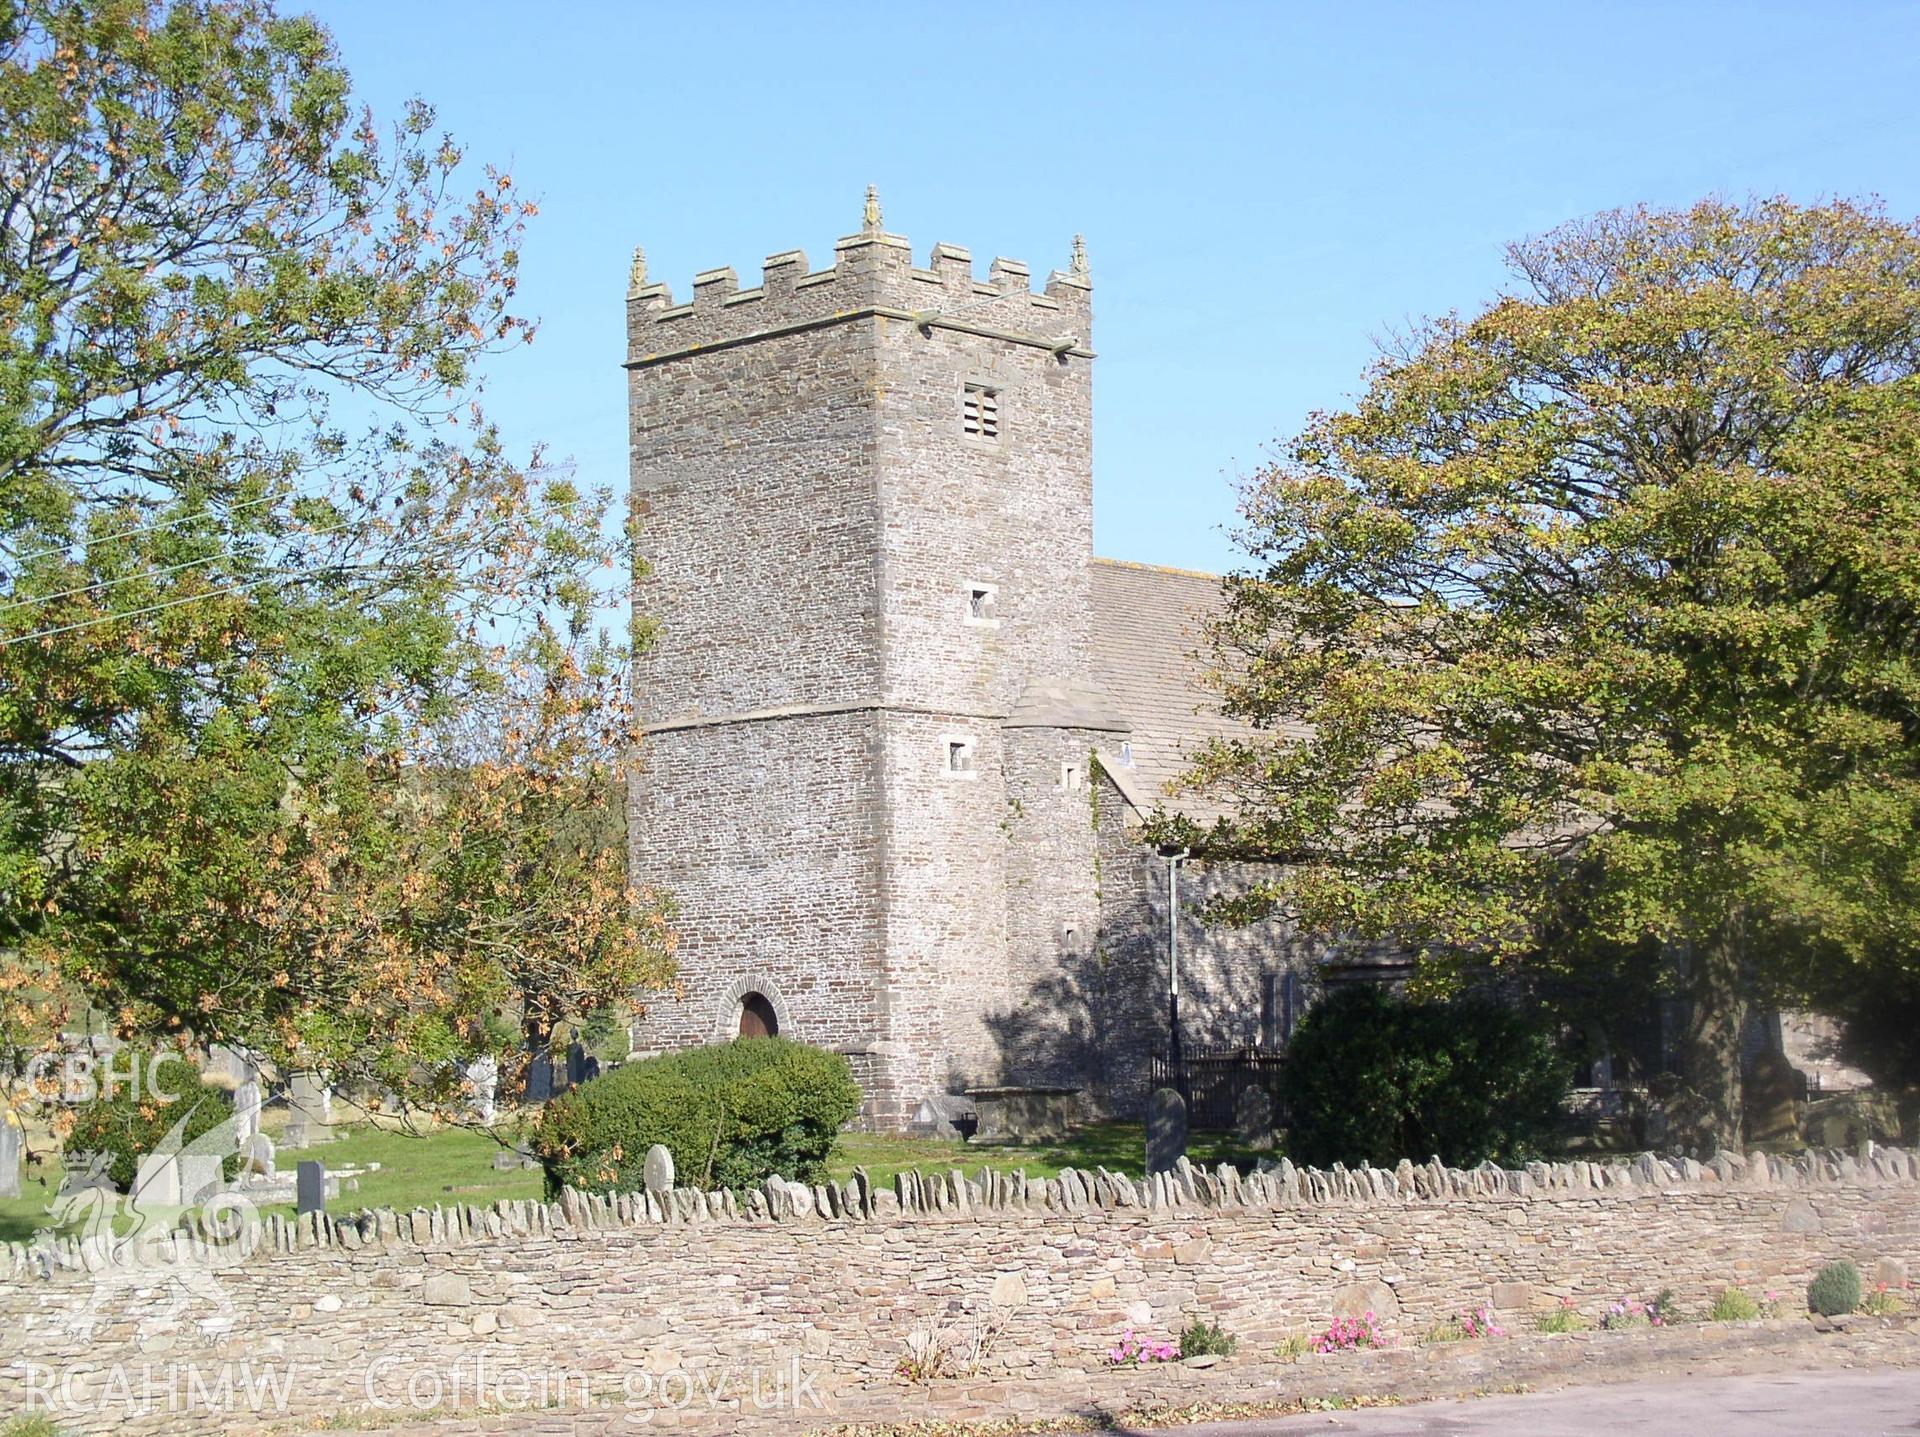 Colour digital photograph showing the exterior of St. Ilan's Church, Eglwysilan; Glamorgan.